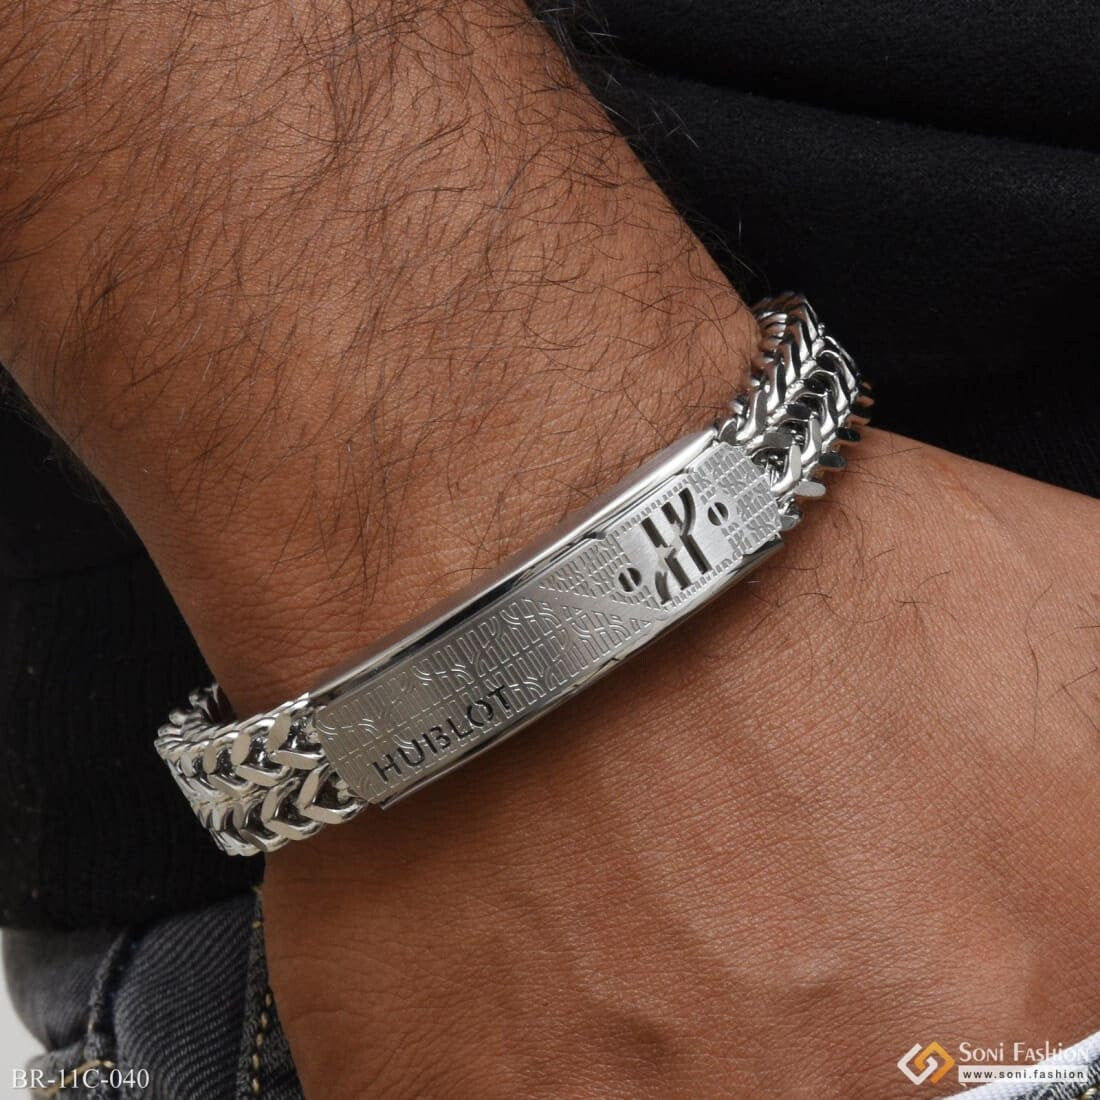 Buy Sterling Silver Identity Bracelet Online in India - Etsy